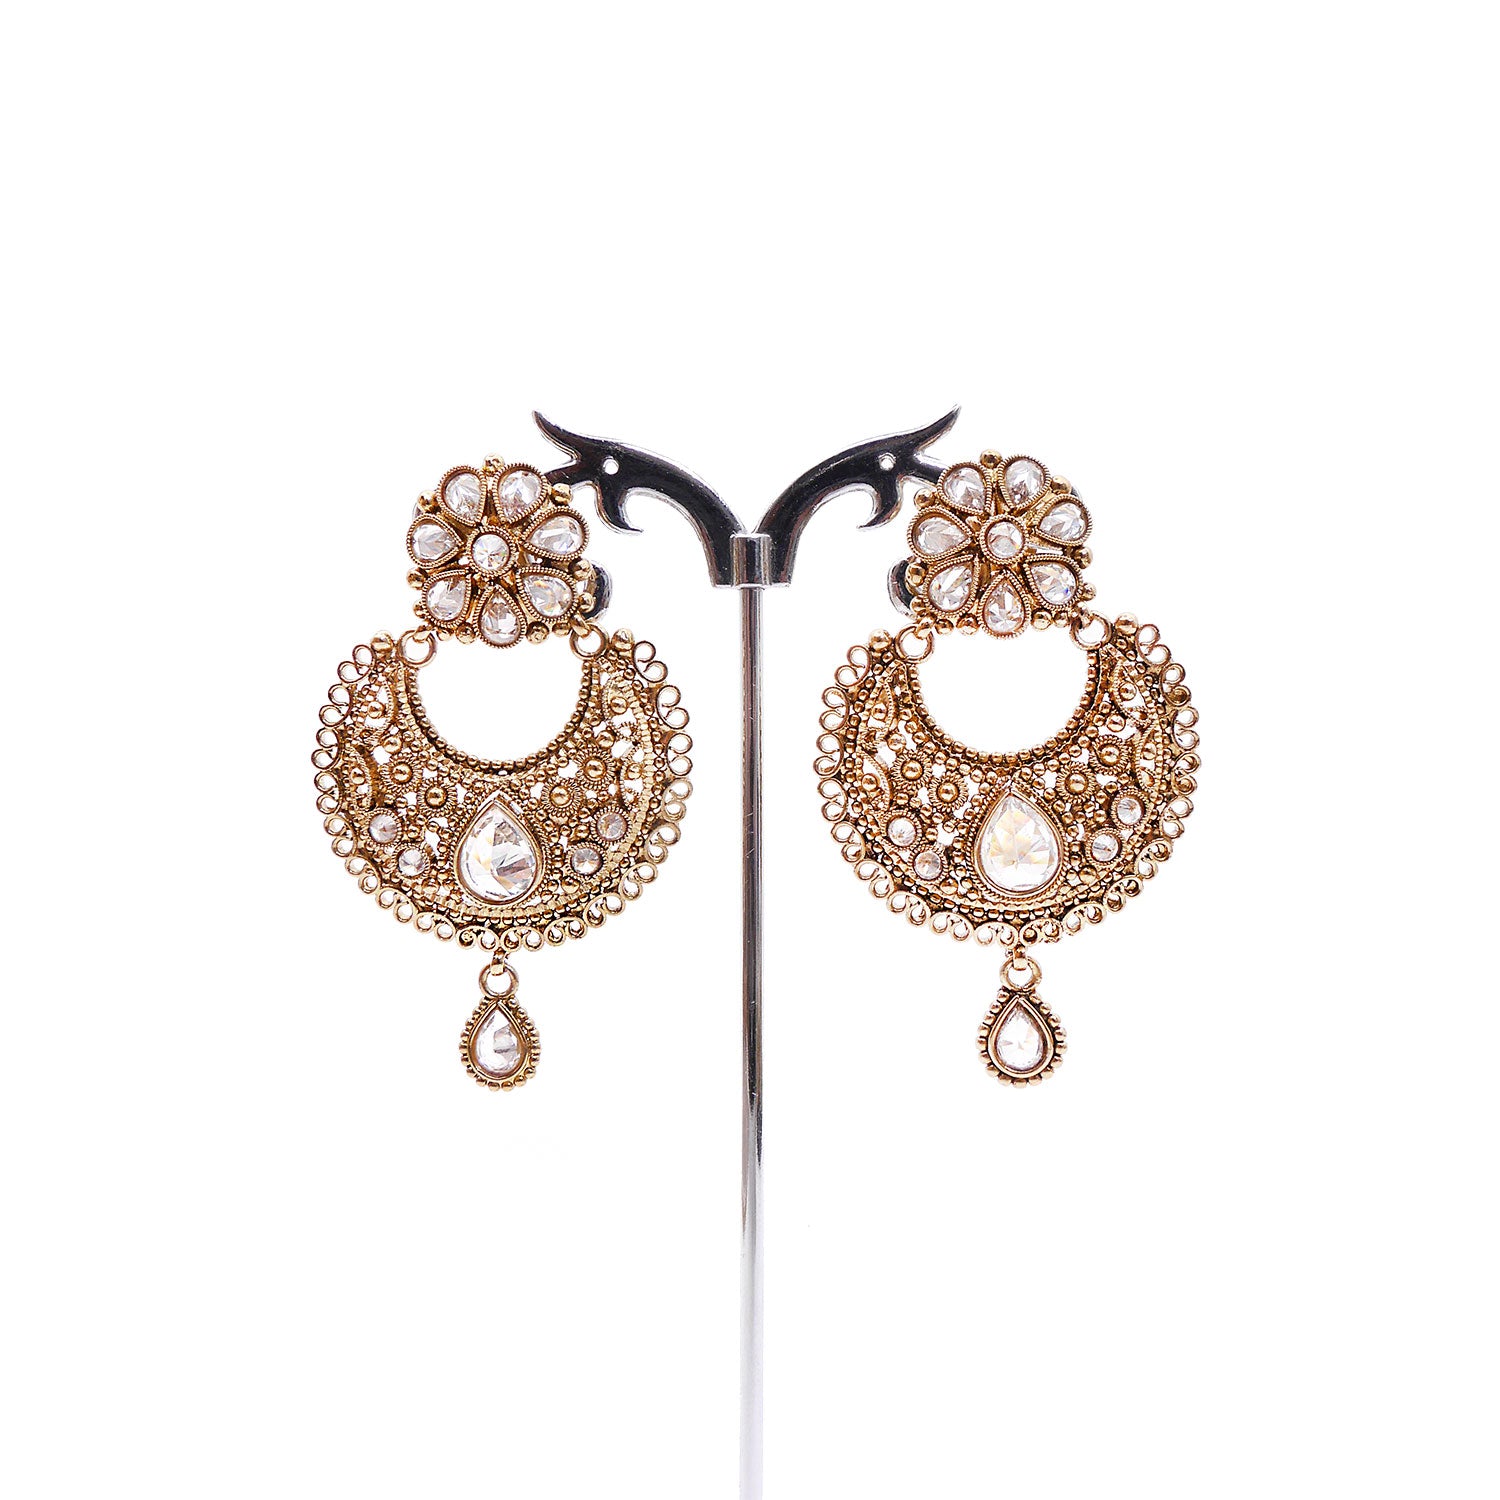 Tanisha Chandbali Earrings in Antique Gold